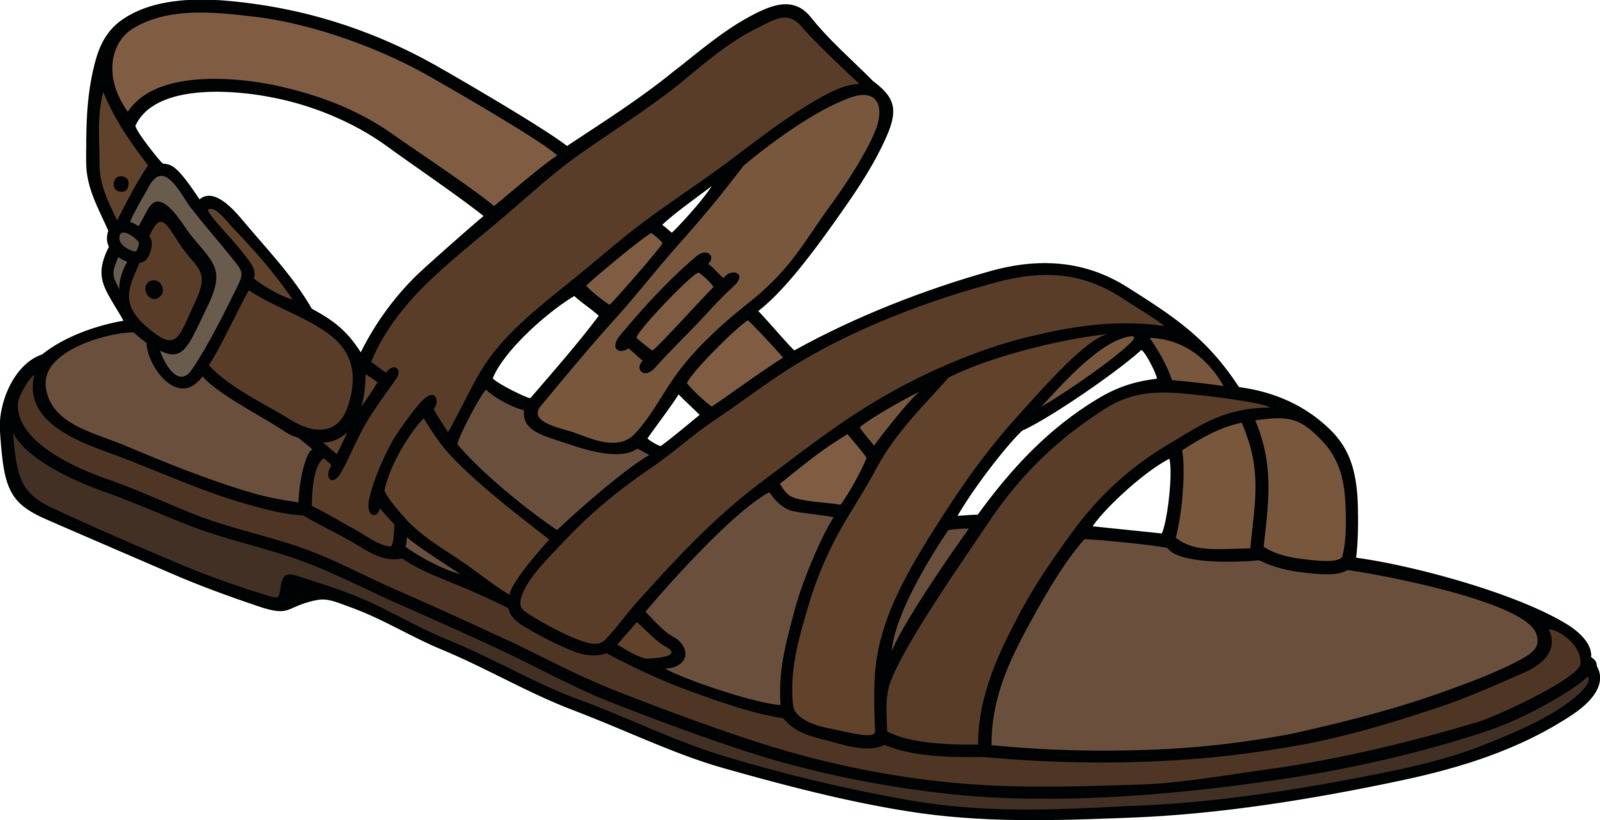 Leather sandal by vostal